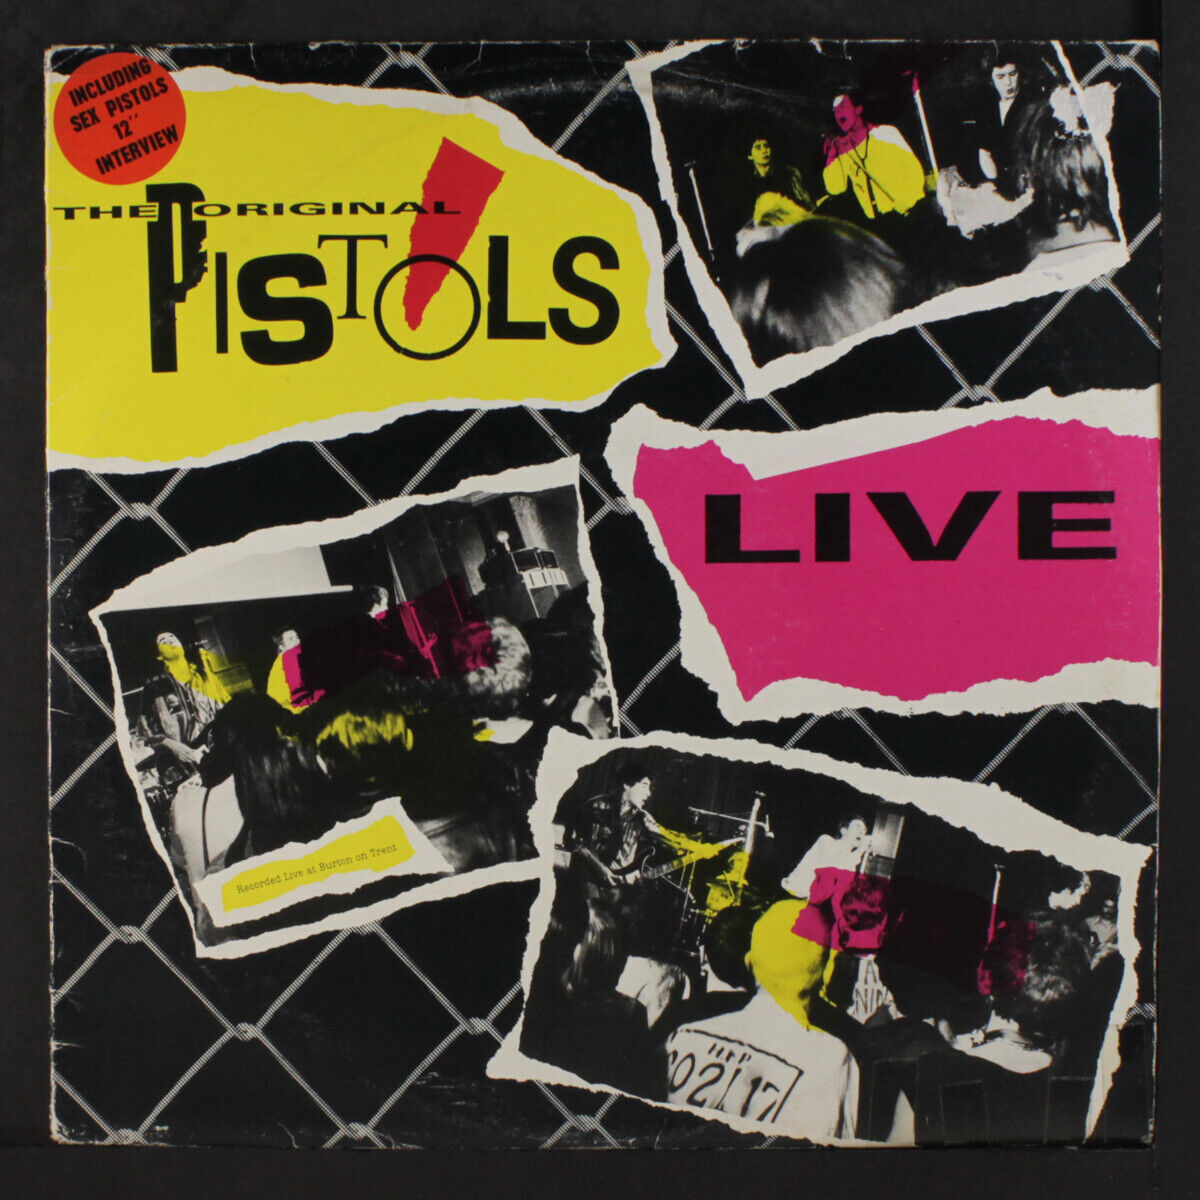 SEX PISTOLS: original pistols live Receiver Records Limited 12" LP 33 RPM UK